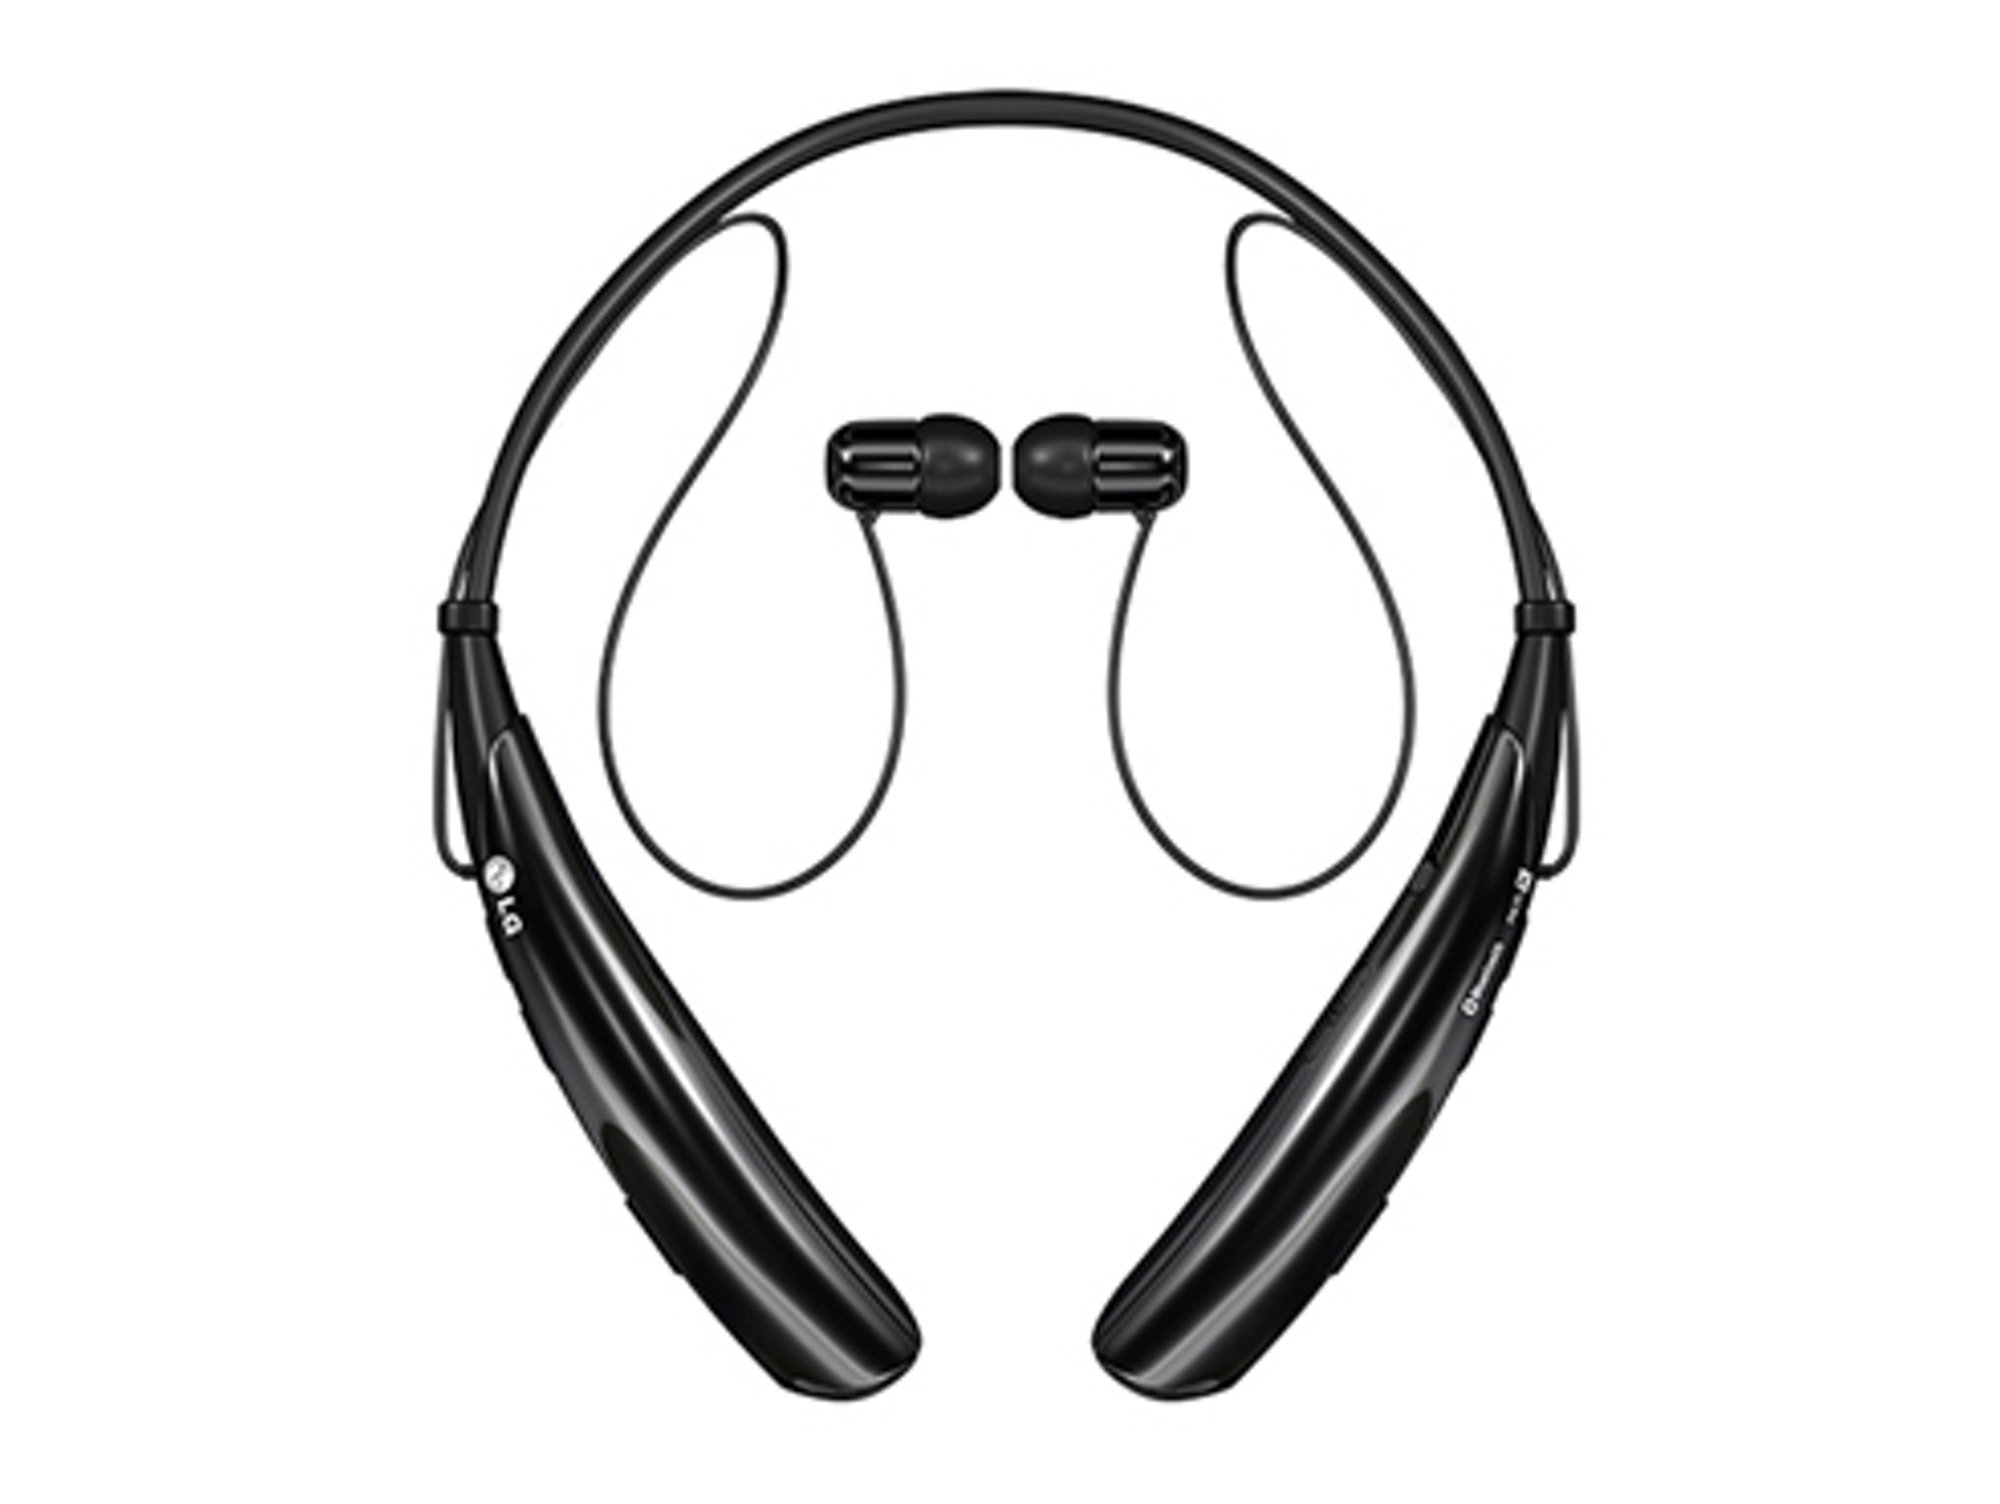 Rústico invierno Que pasa Auriculares Bluetooth LG Hbs-750 (In Ear - Micrófono - Noise Cancelling -  Negro)